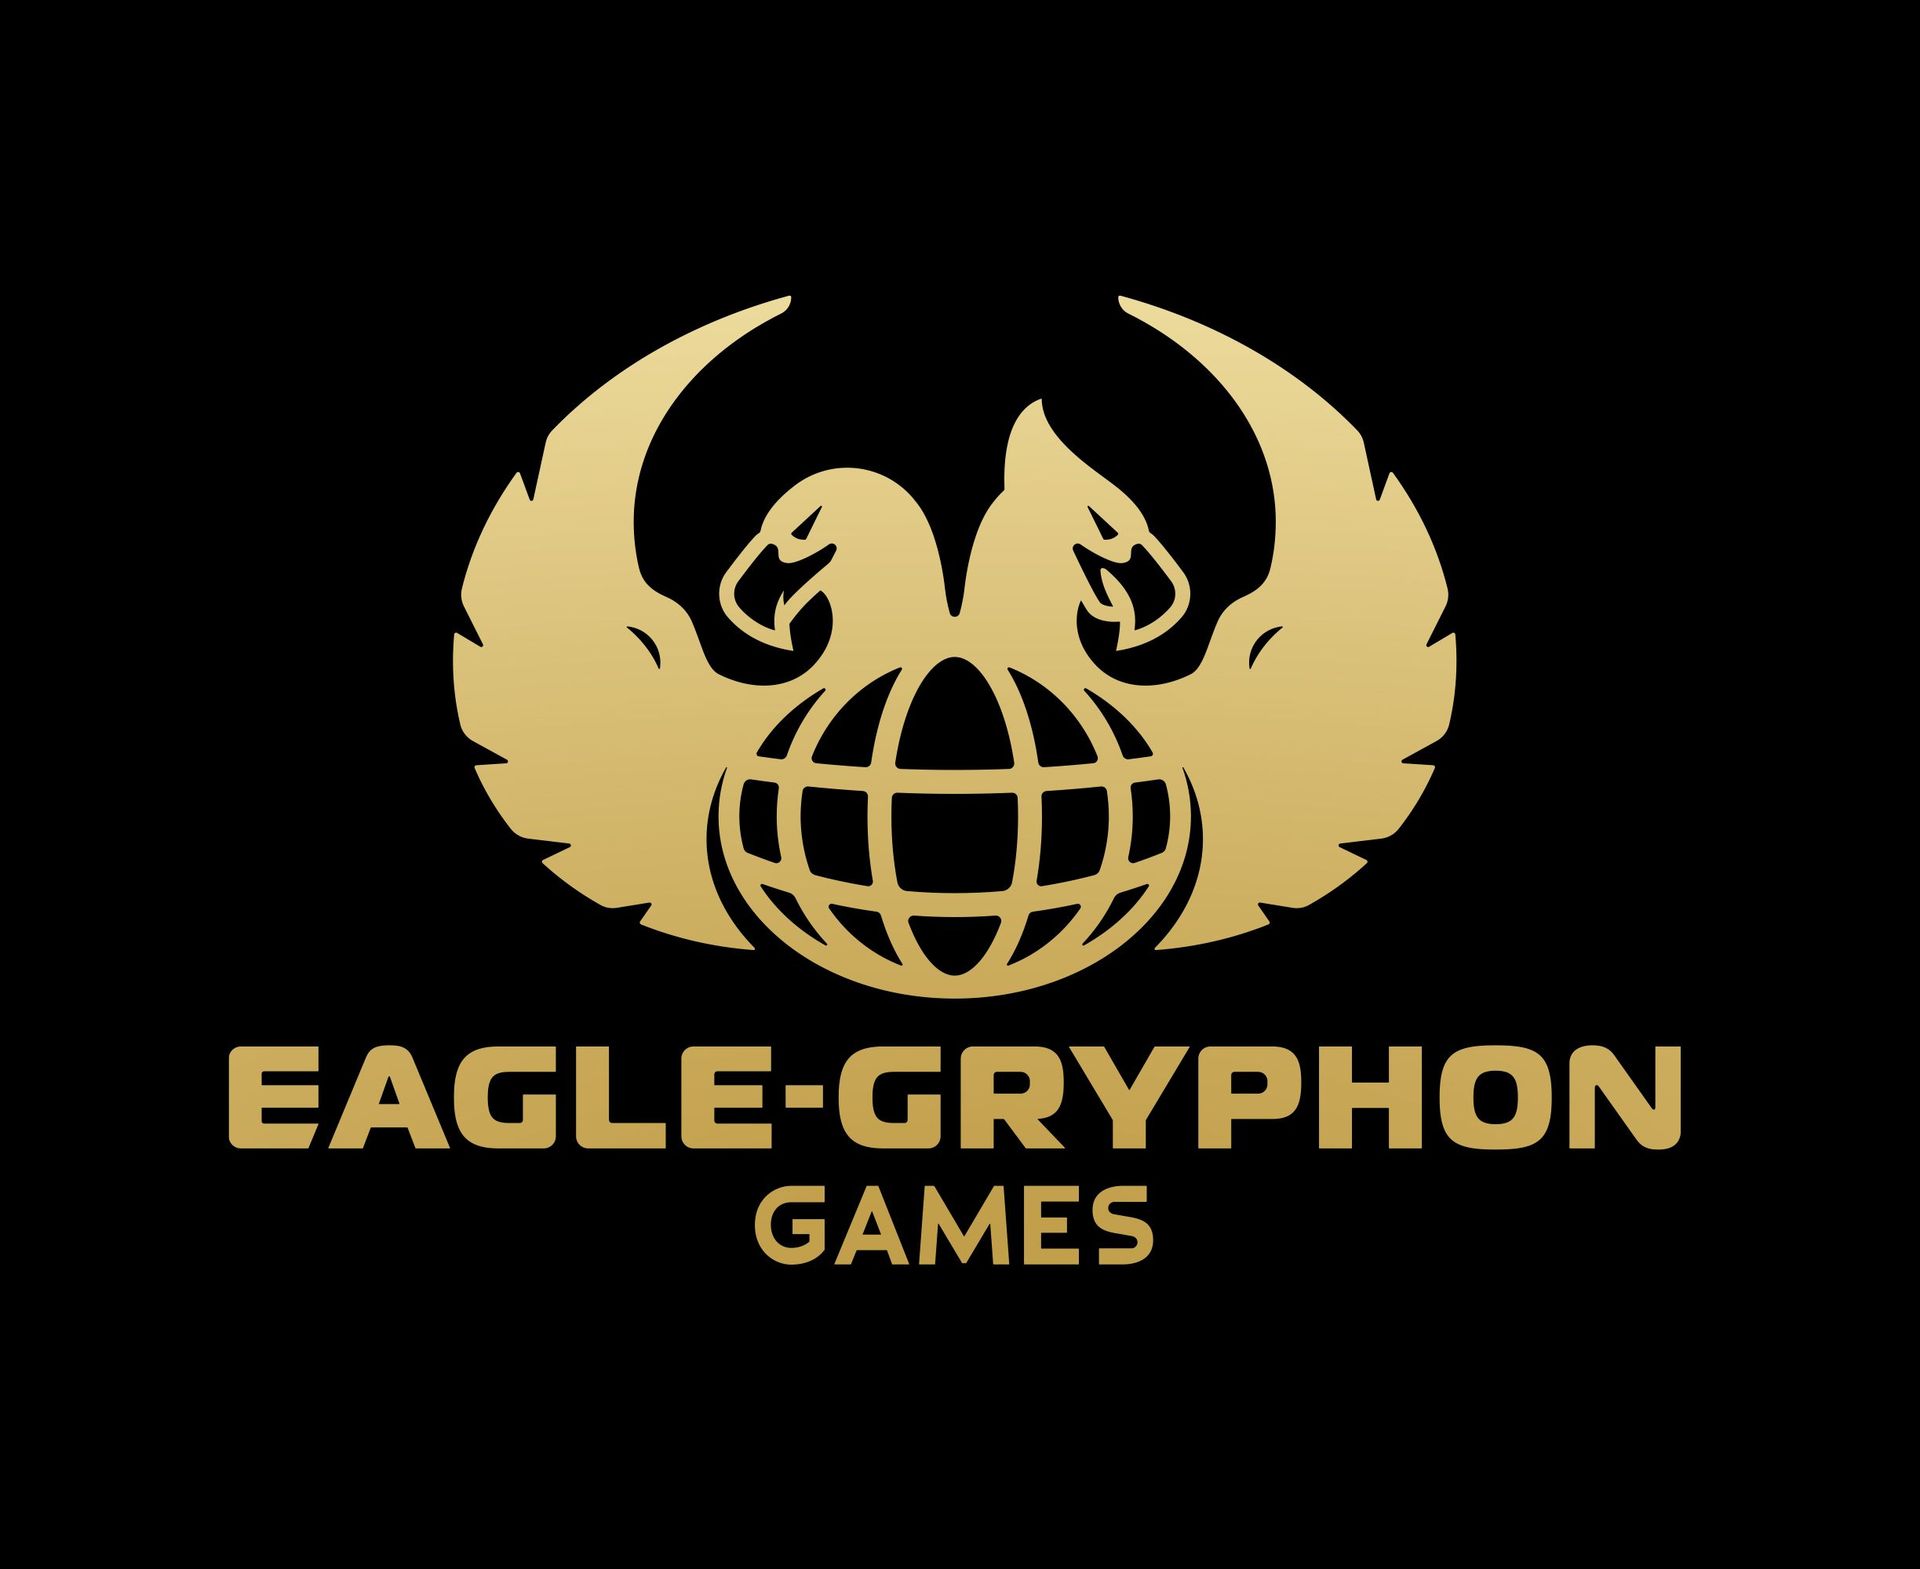 Brand: Eagle-Gryphon Games